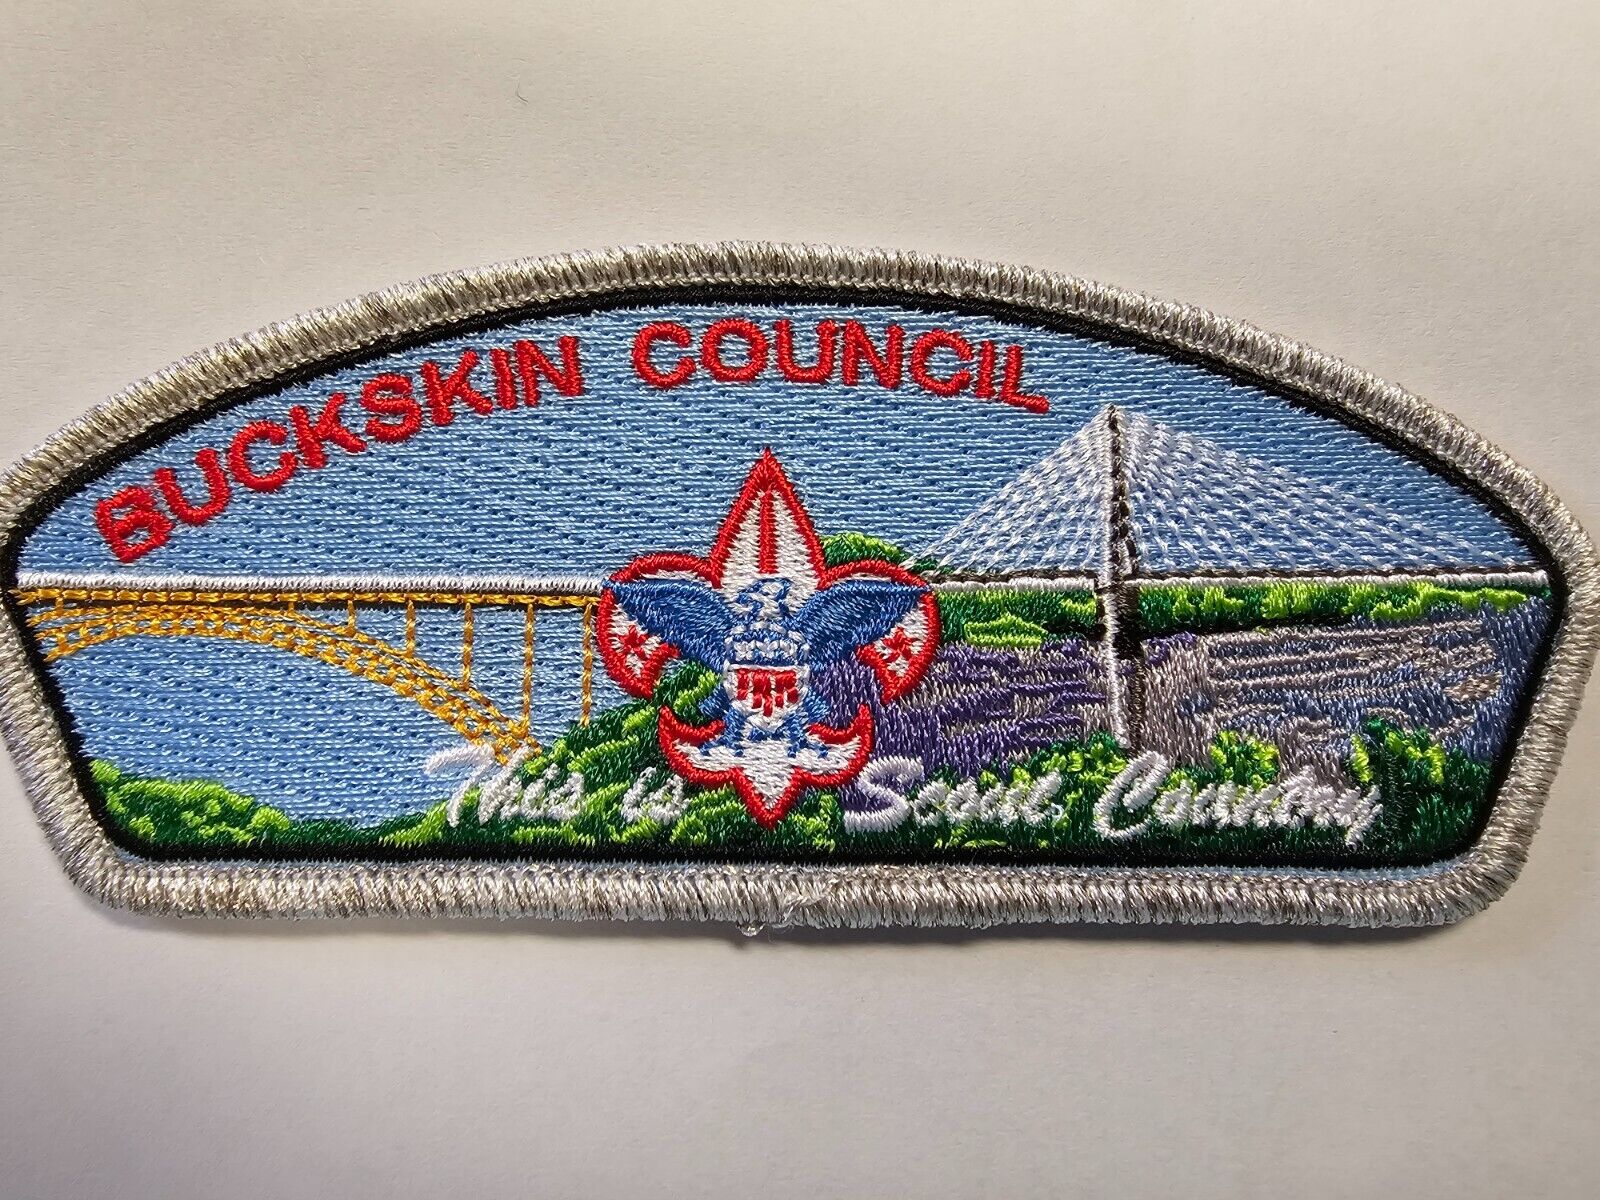 Buckskin Council CSP - Silver Border - New, Never Worn  Very Nice